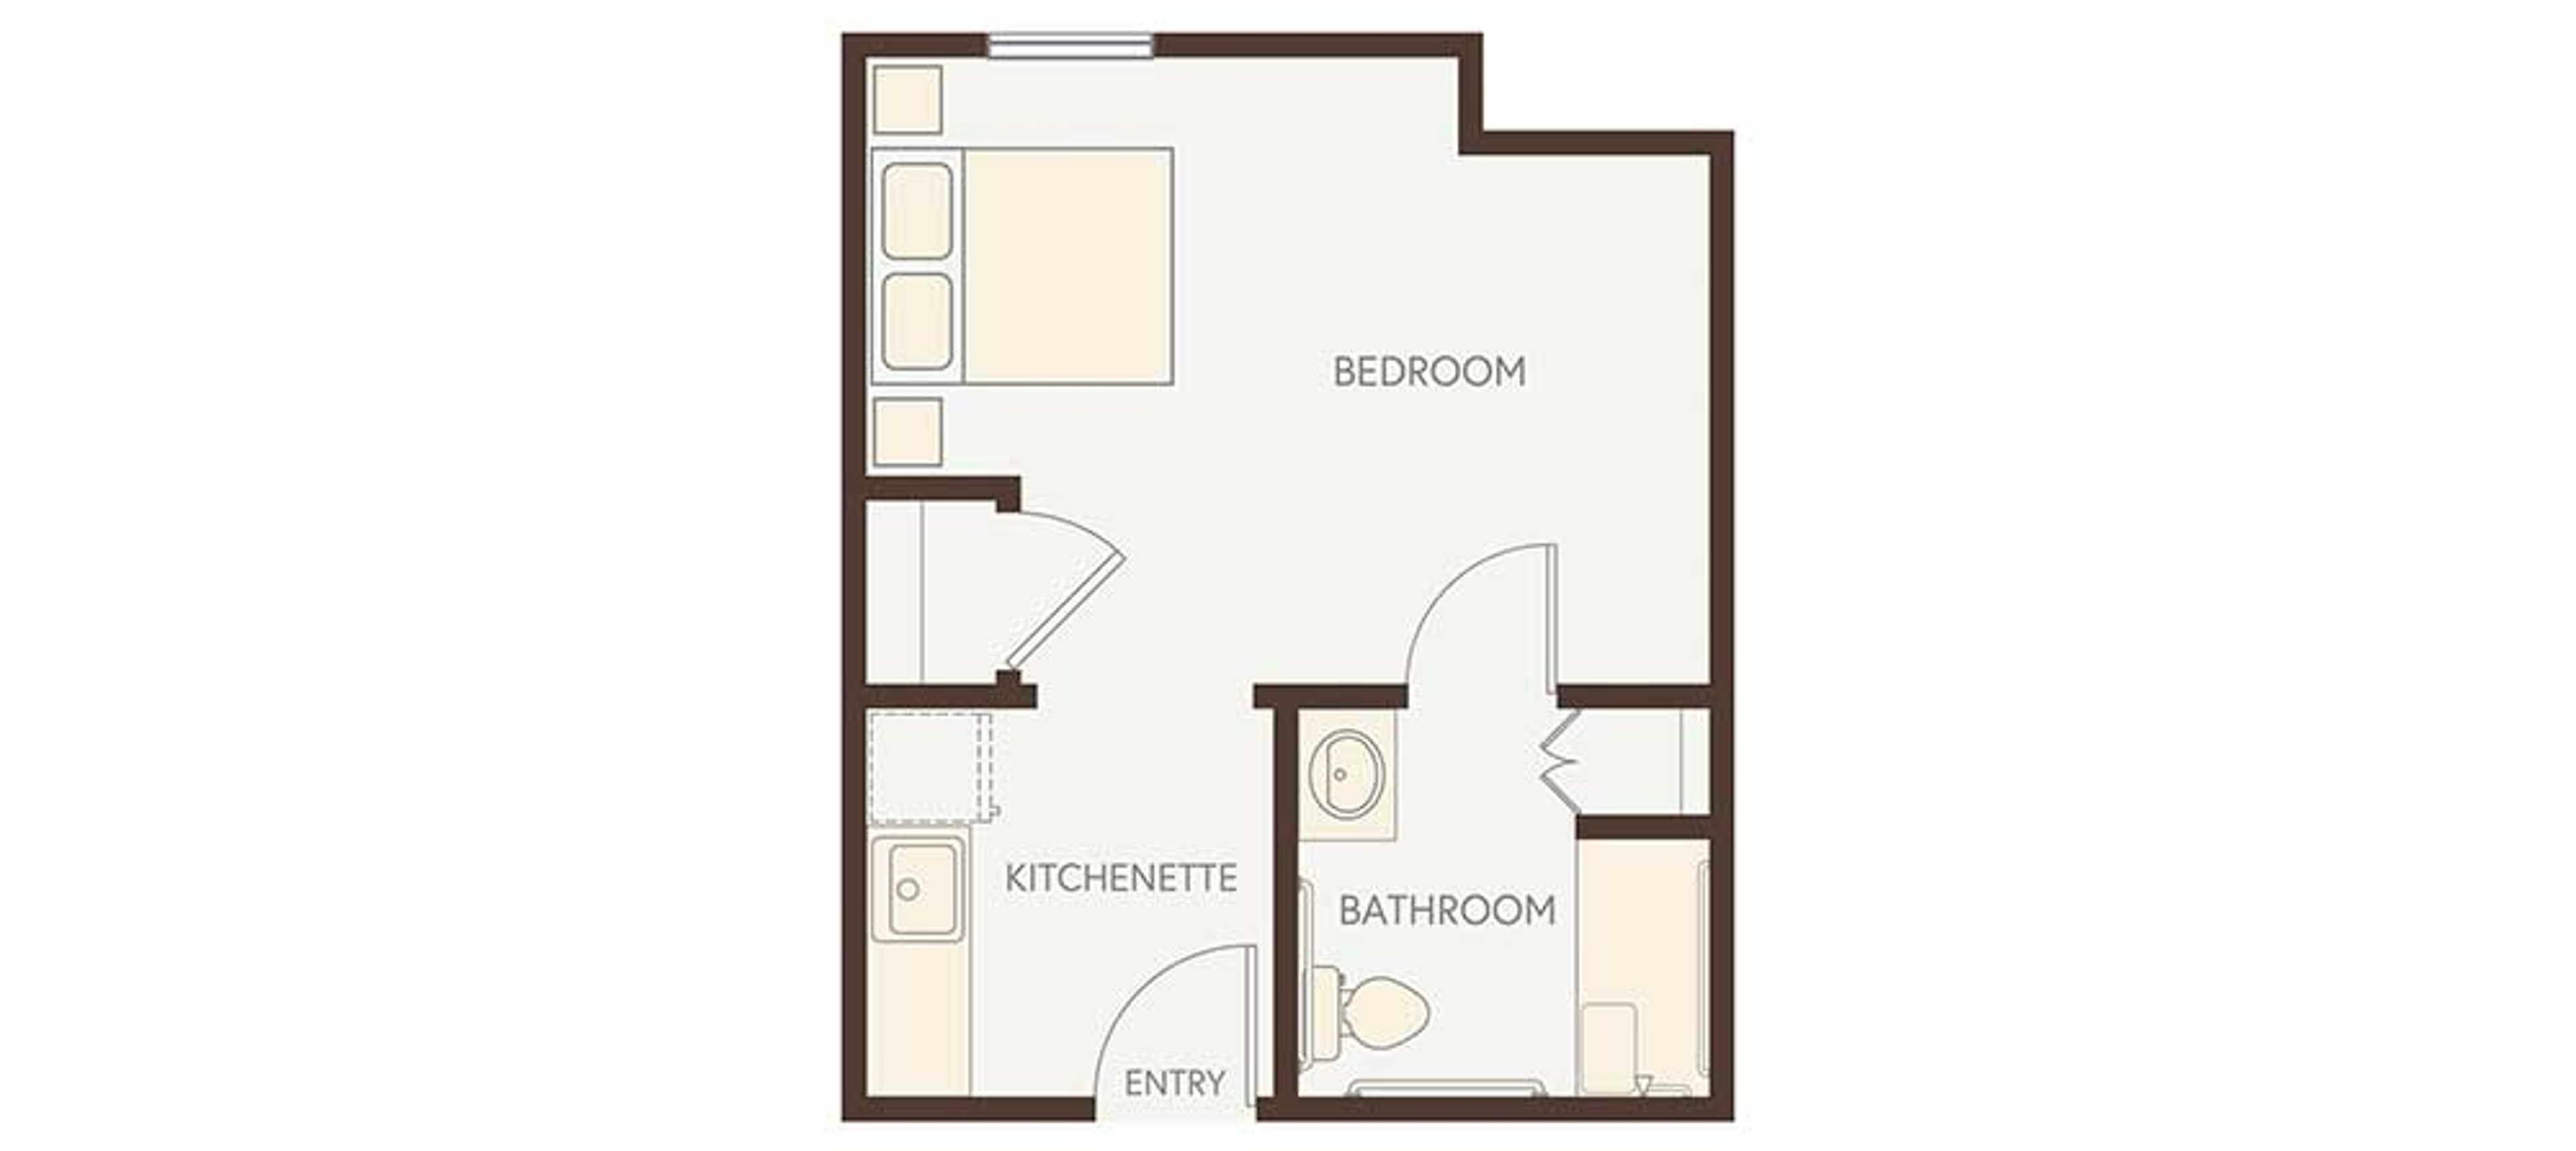 Floorplan - Heartis San Antonio - Studio 340 sq. ft. Assisted Living